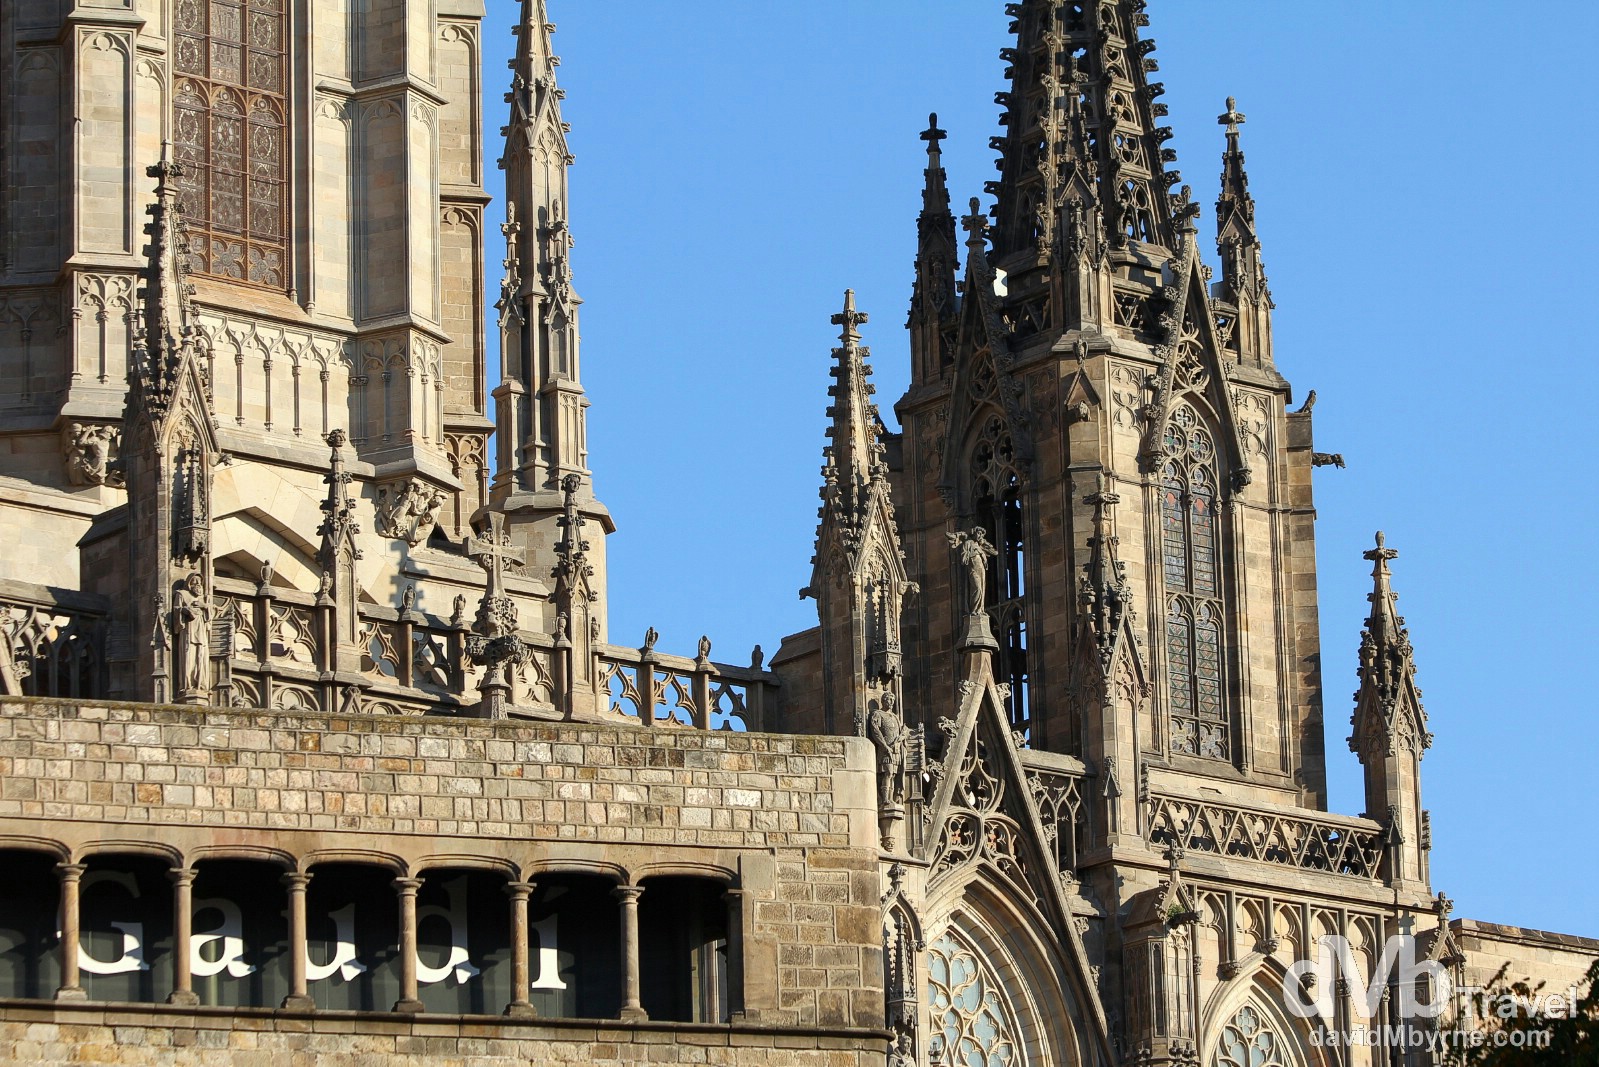 Detail of La Catedral in Barri Gotic, Barcelona, Spain. June 16th, 2014.